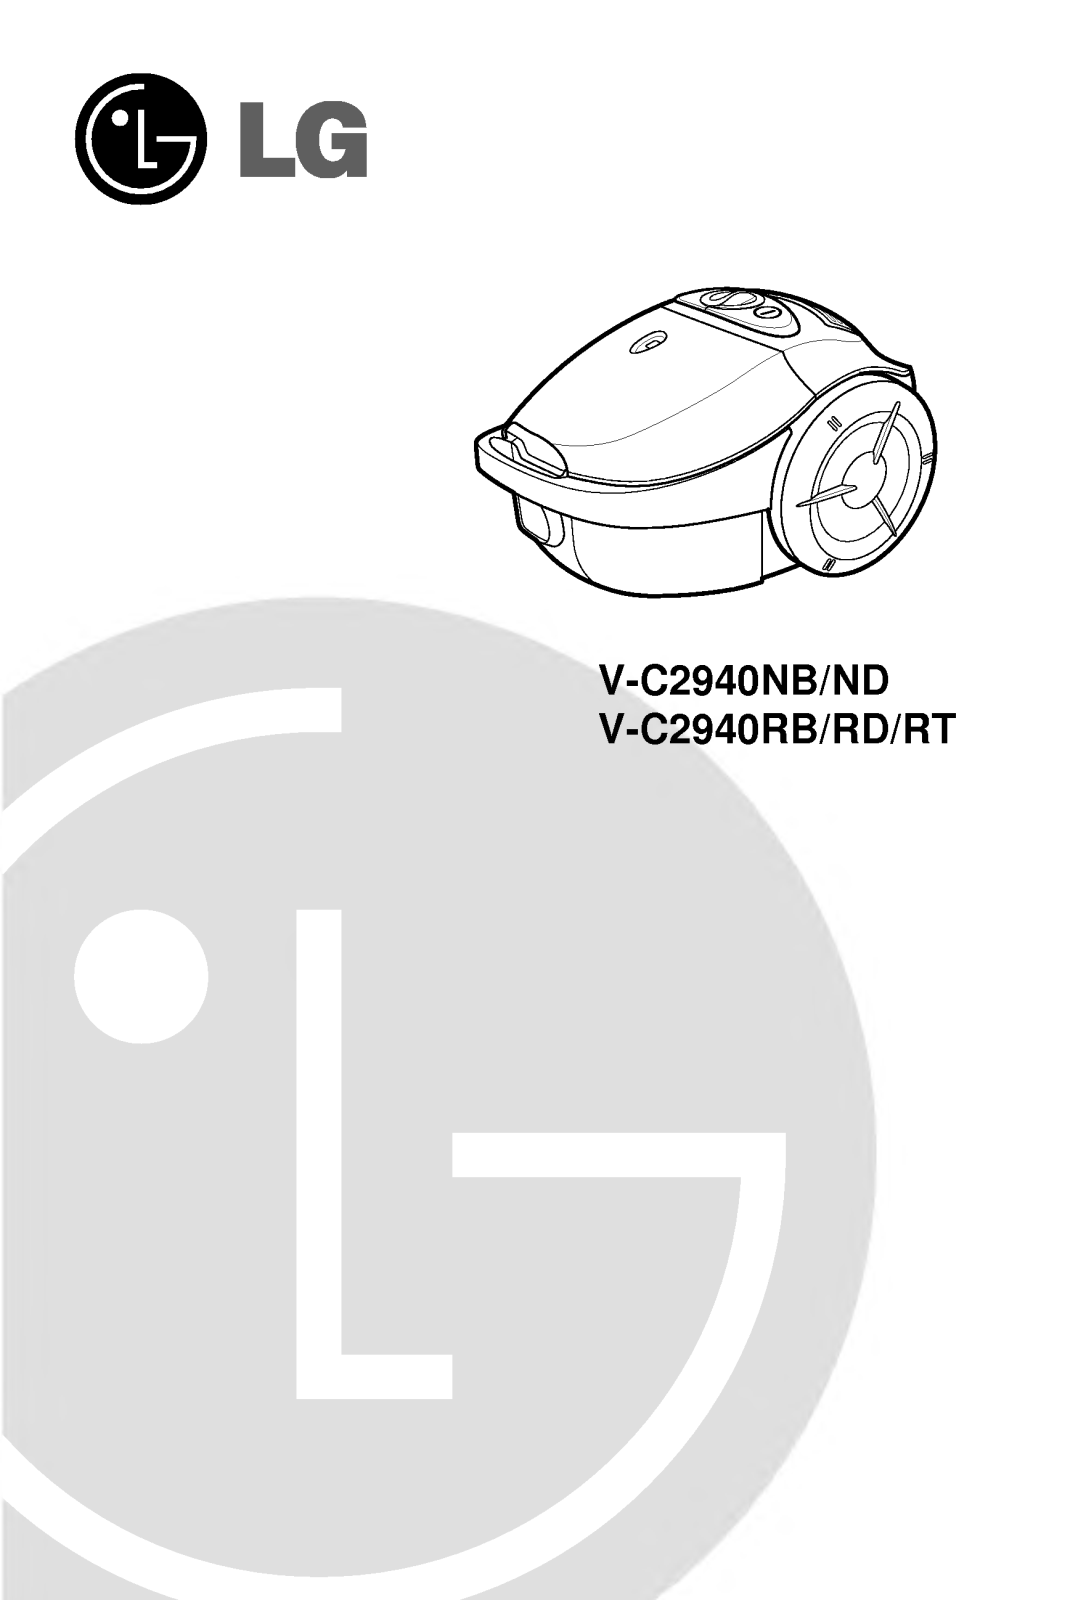 LG V-C2950RD User Manual